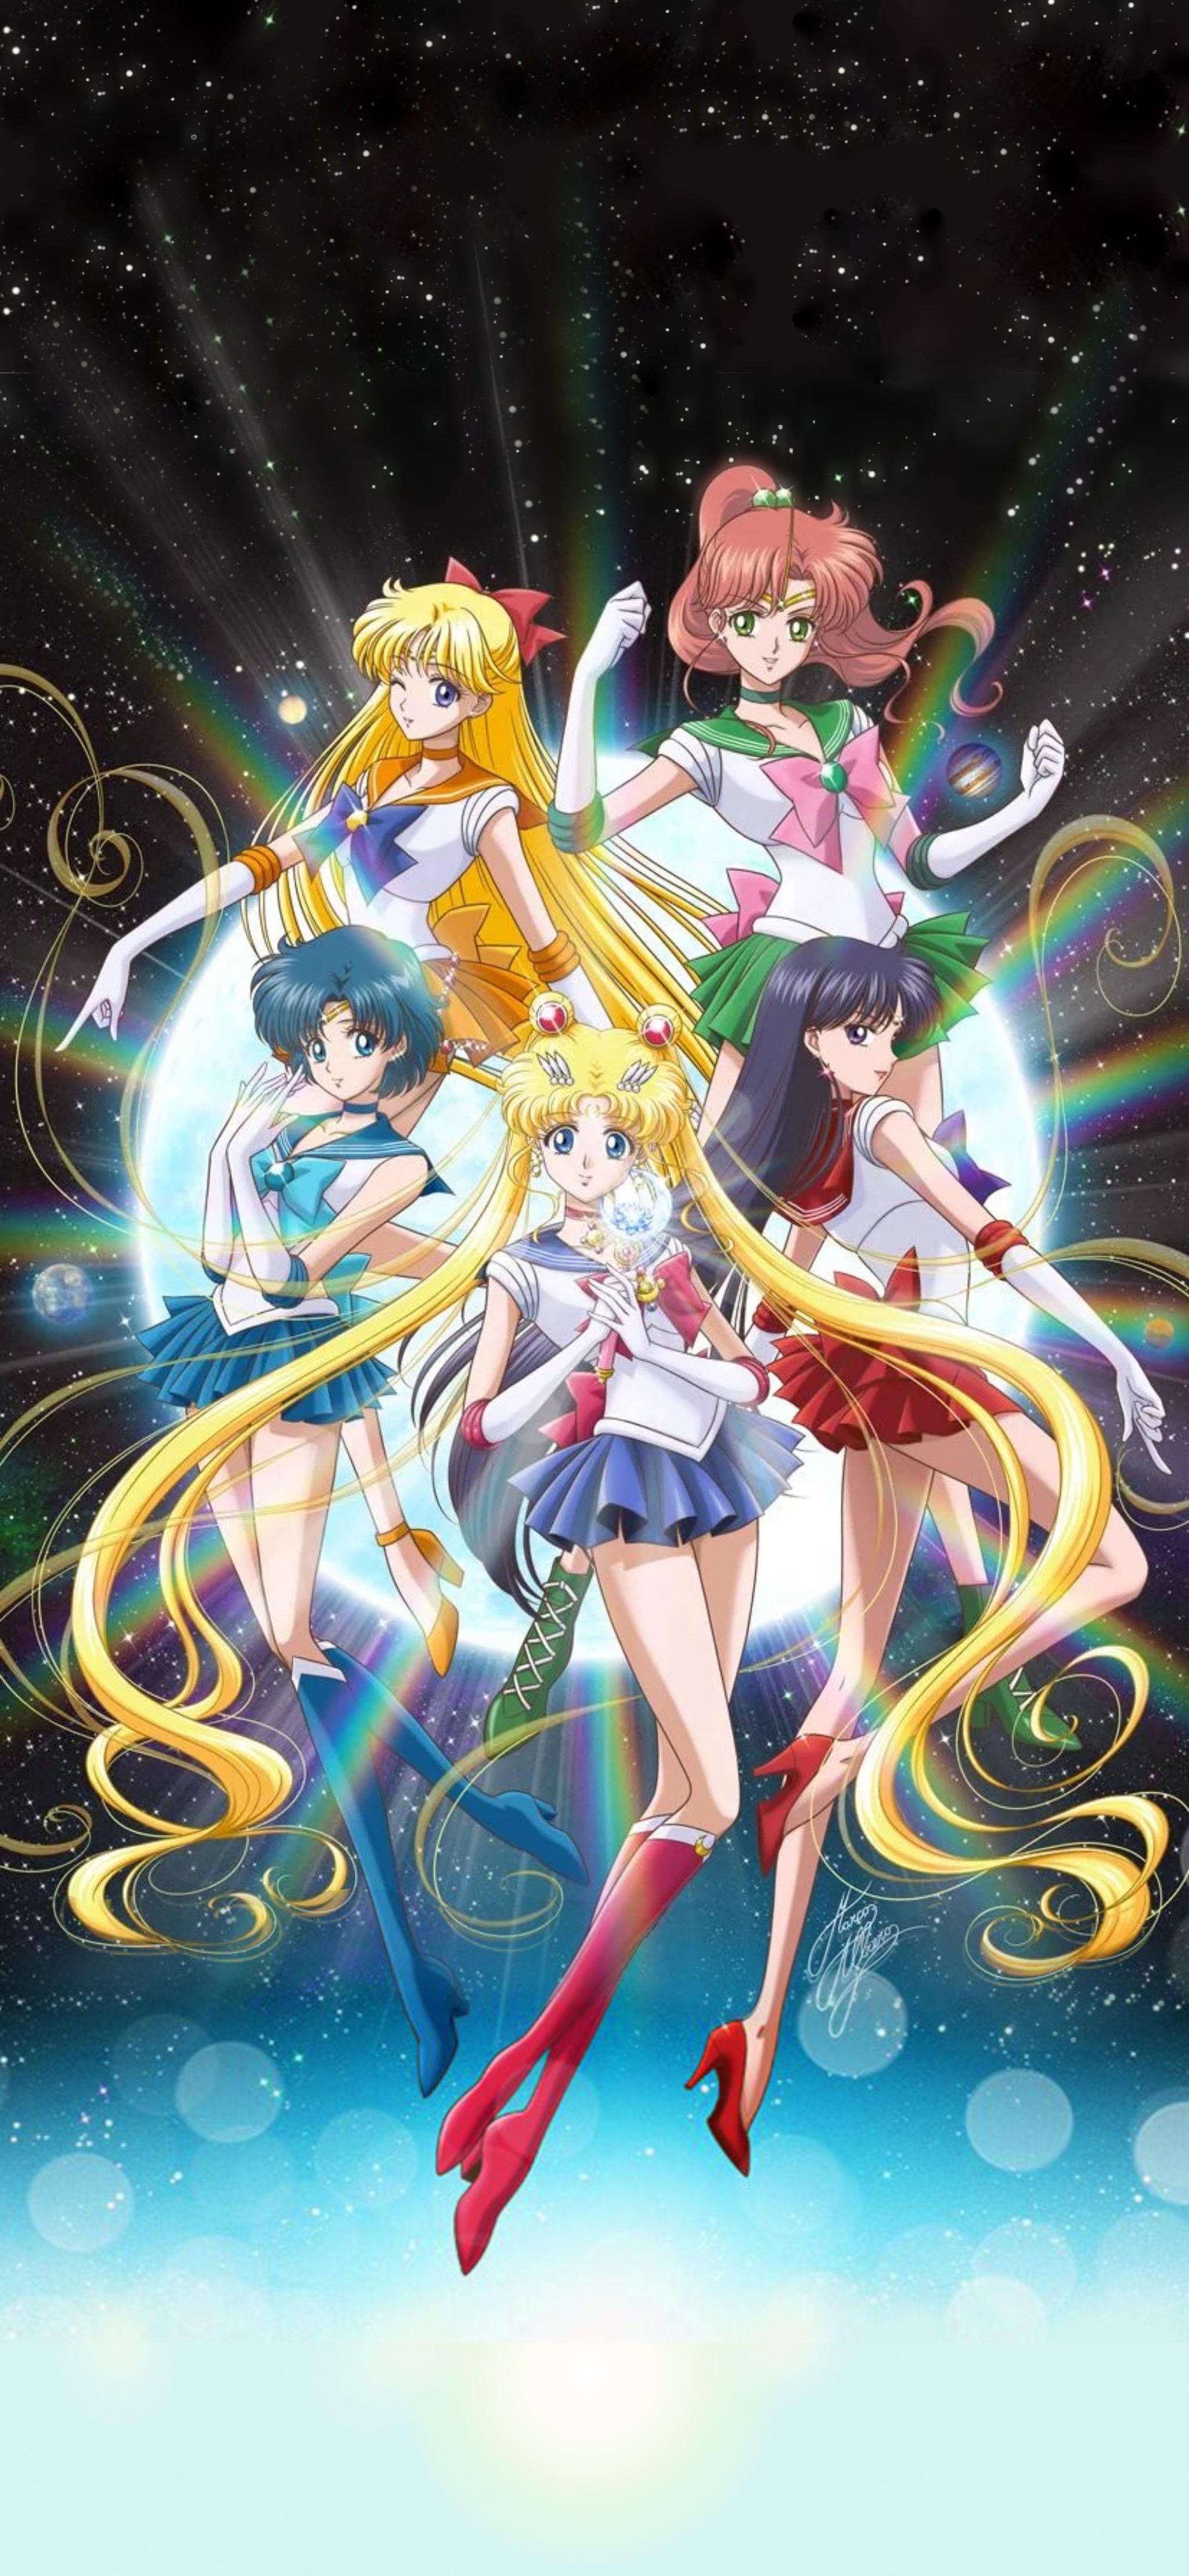 sailor moon wallpaper android. Sailor moon wallpaper, Sailor moon girls, Sailor moon